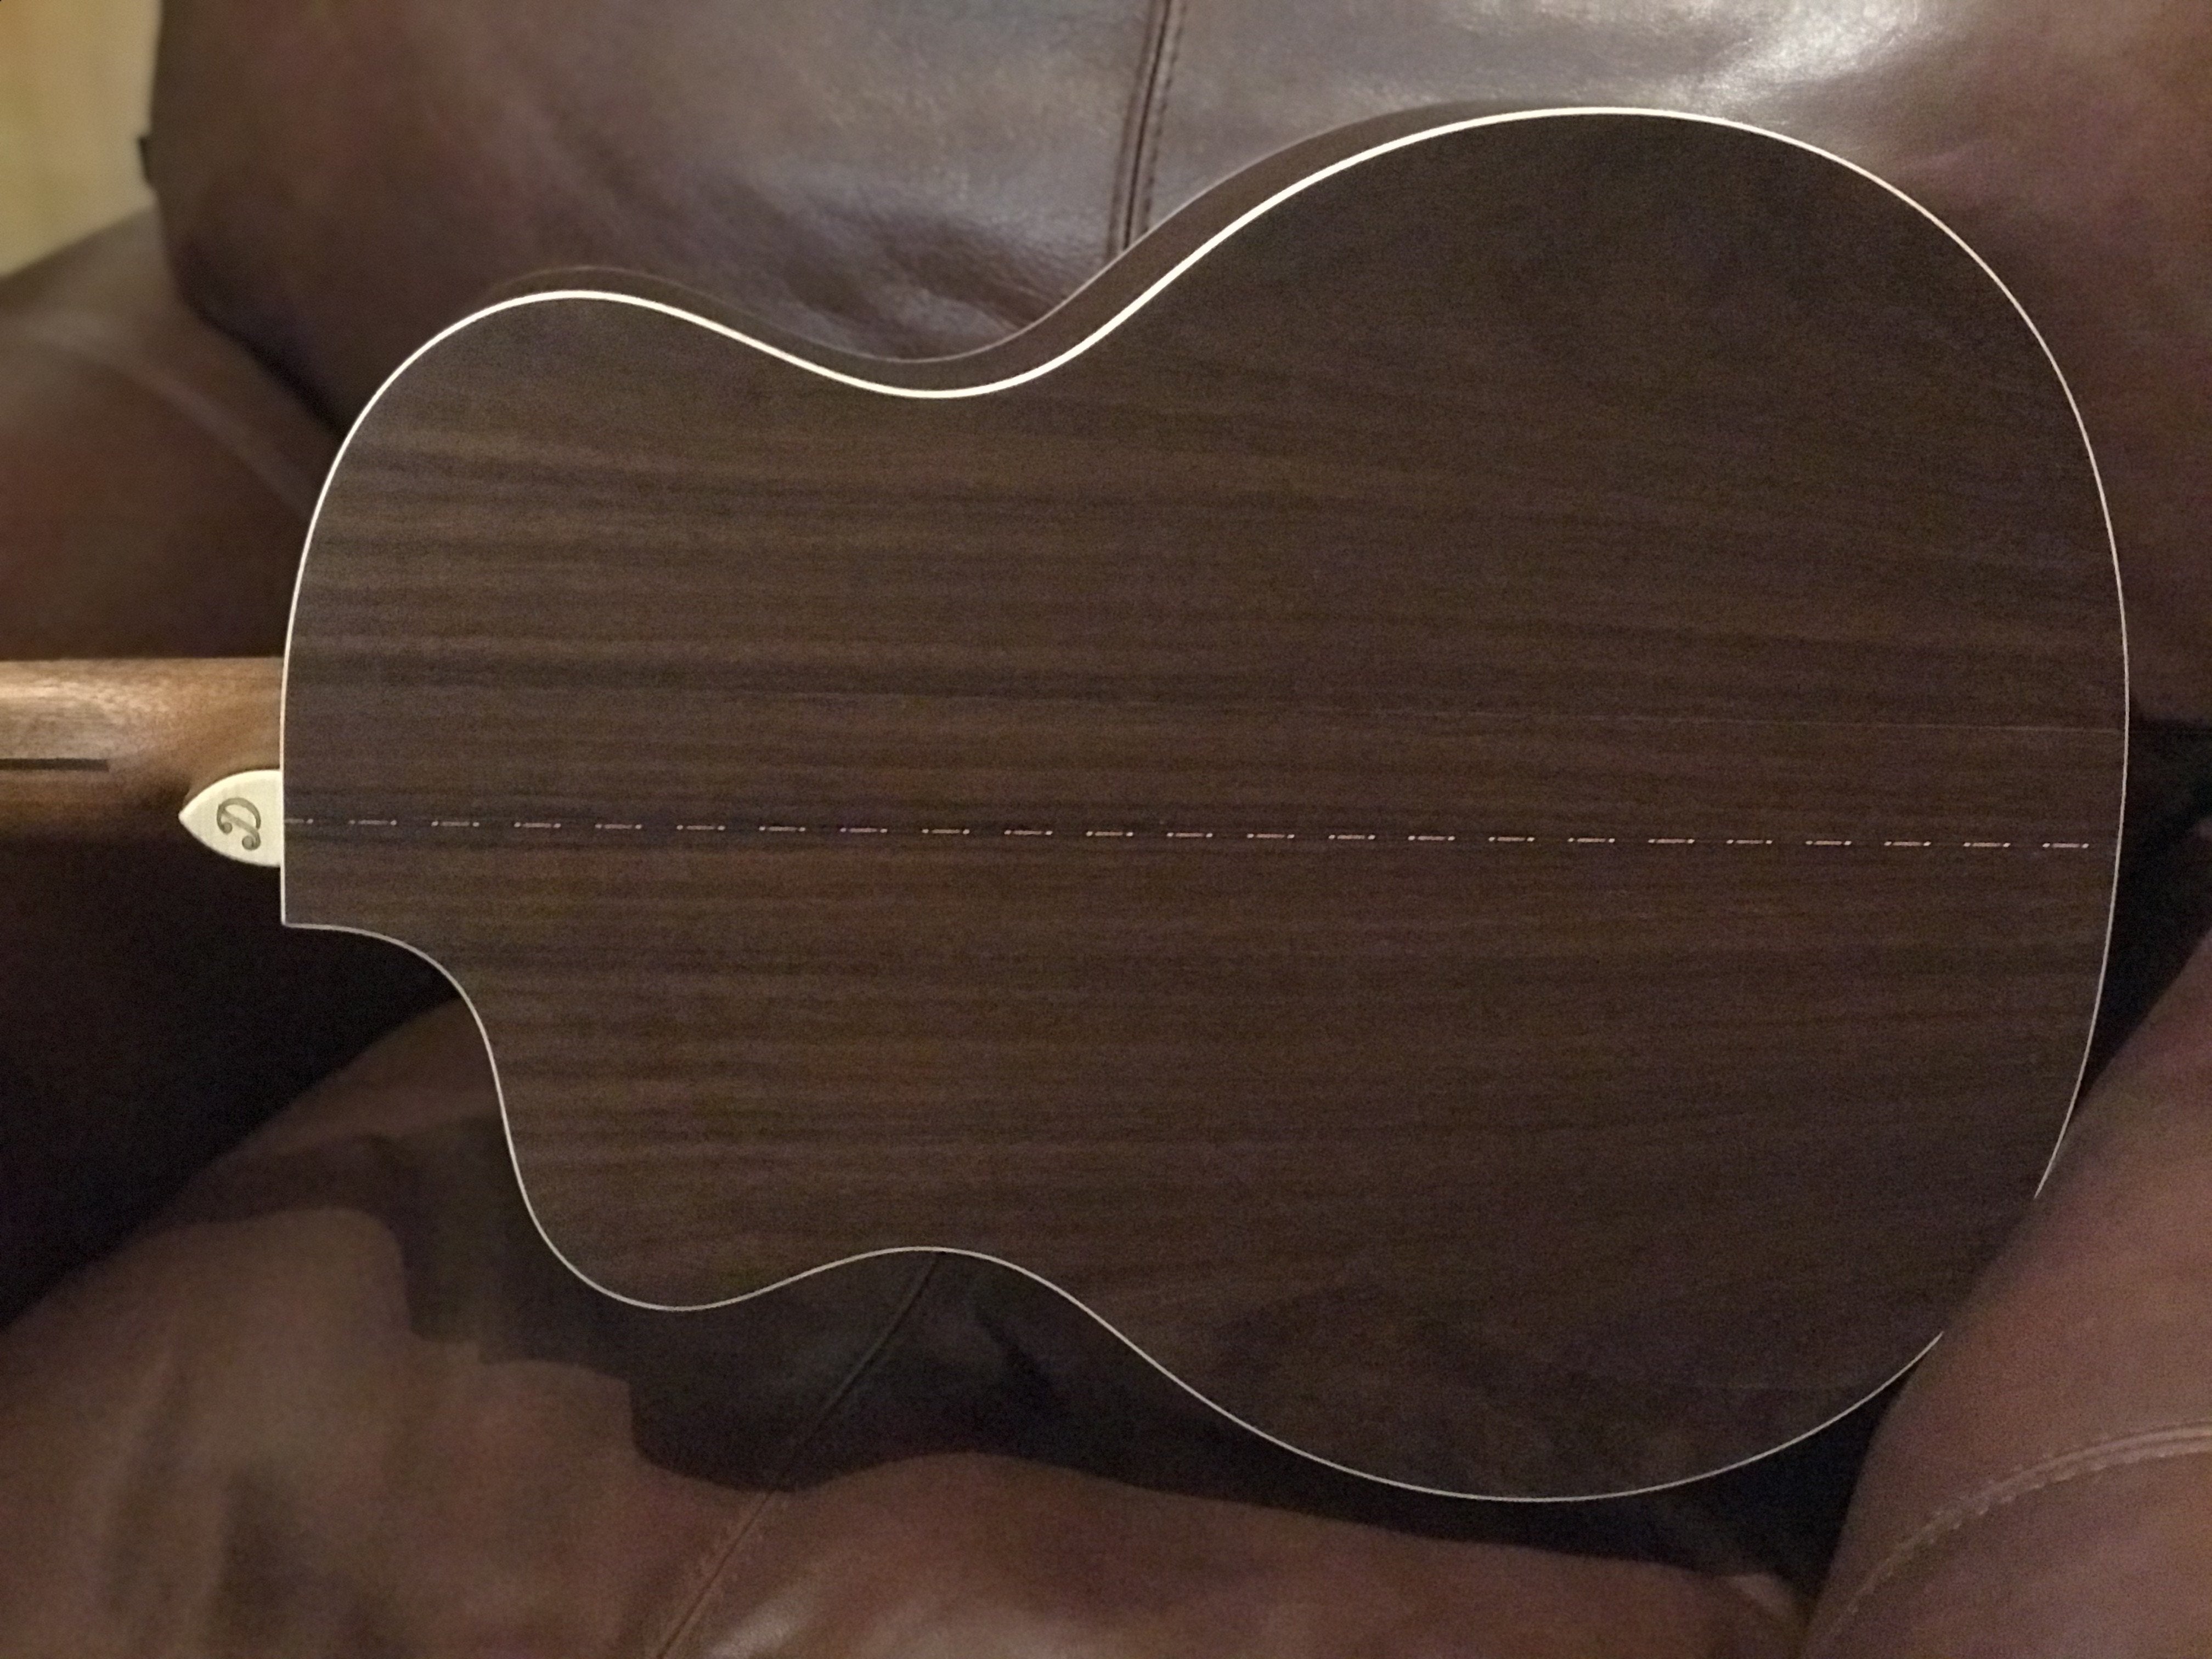 Dowina Rosewood (Ceres) HC-S Hybrid Nylon String Cutaway, Nylon Strung Guitar for sale at Richards Guitars.